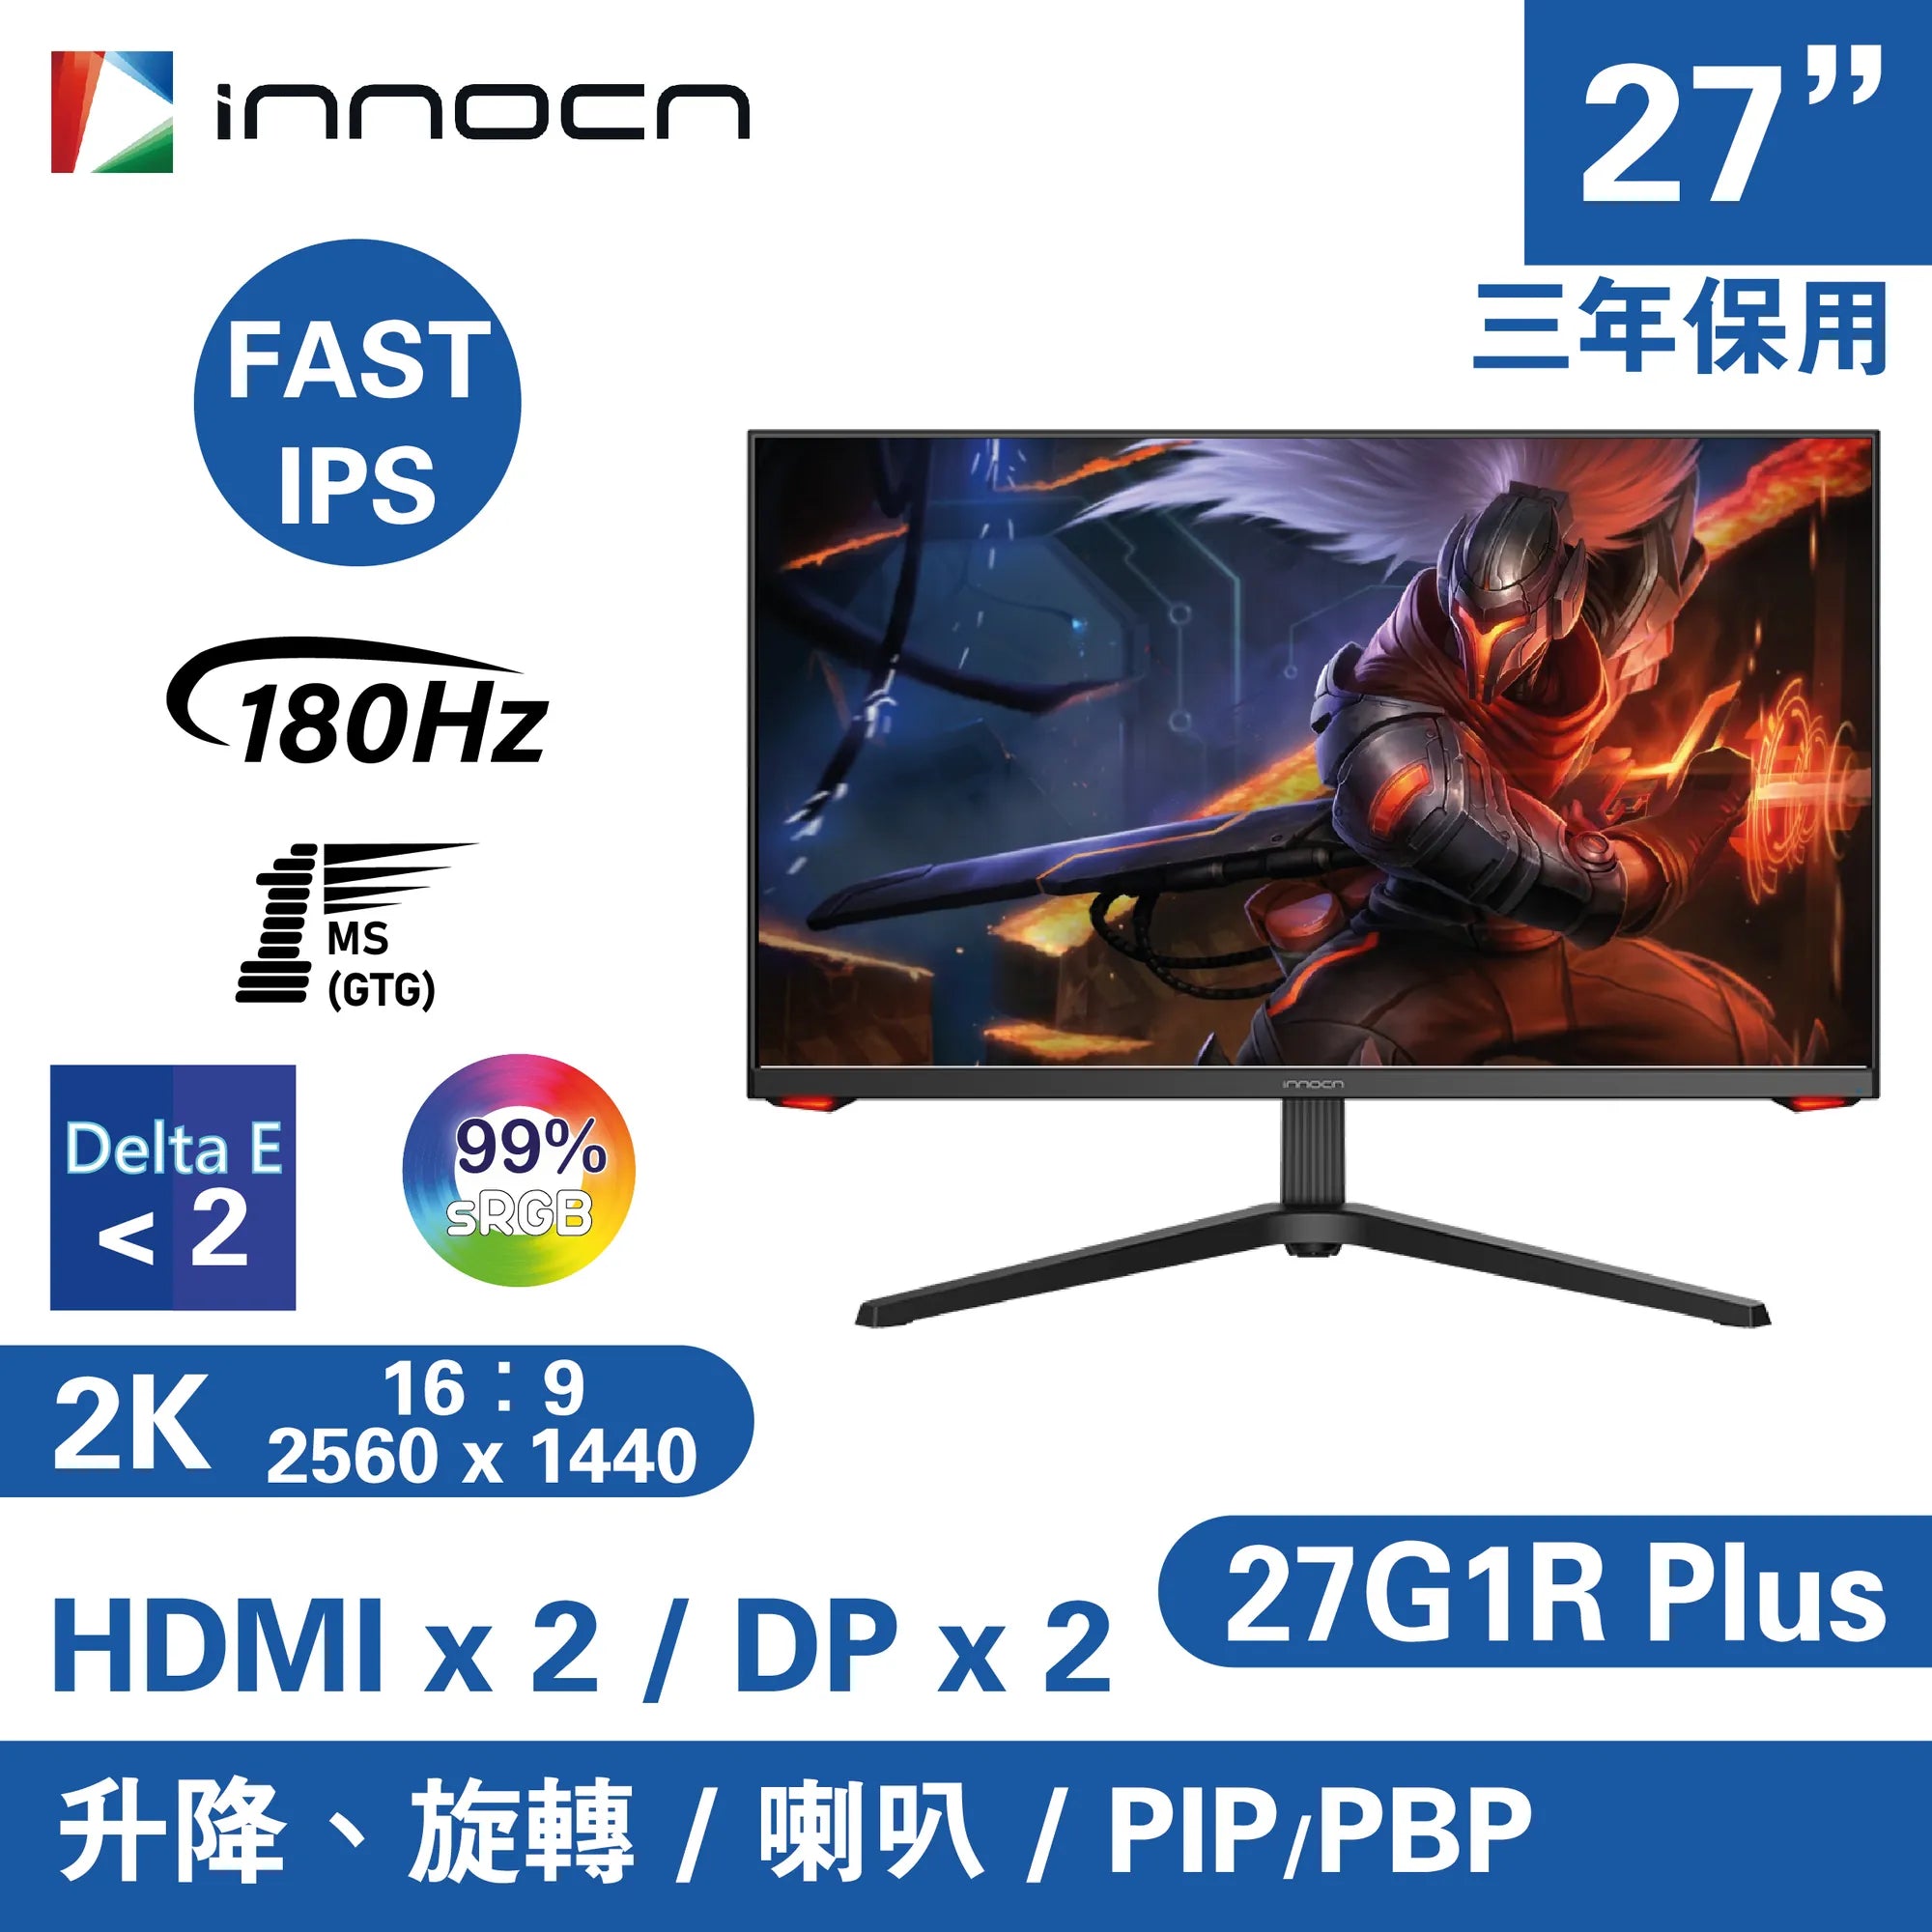 INNOCN 27G1R Plus 電競顯示器 (27吋 / WQHD / 180Hz / Fast IPS / FreeSync / 內置喇叭) - 2560 x 1440   3年上門保養